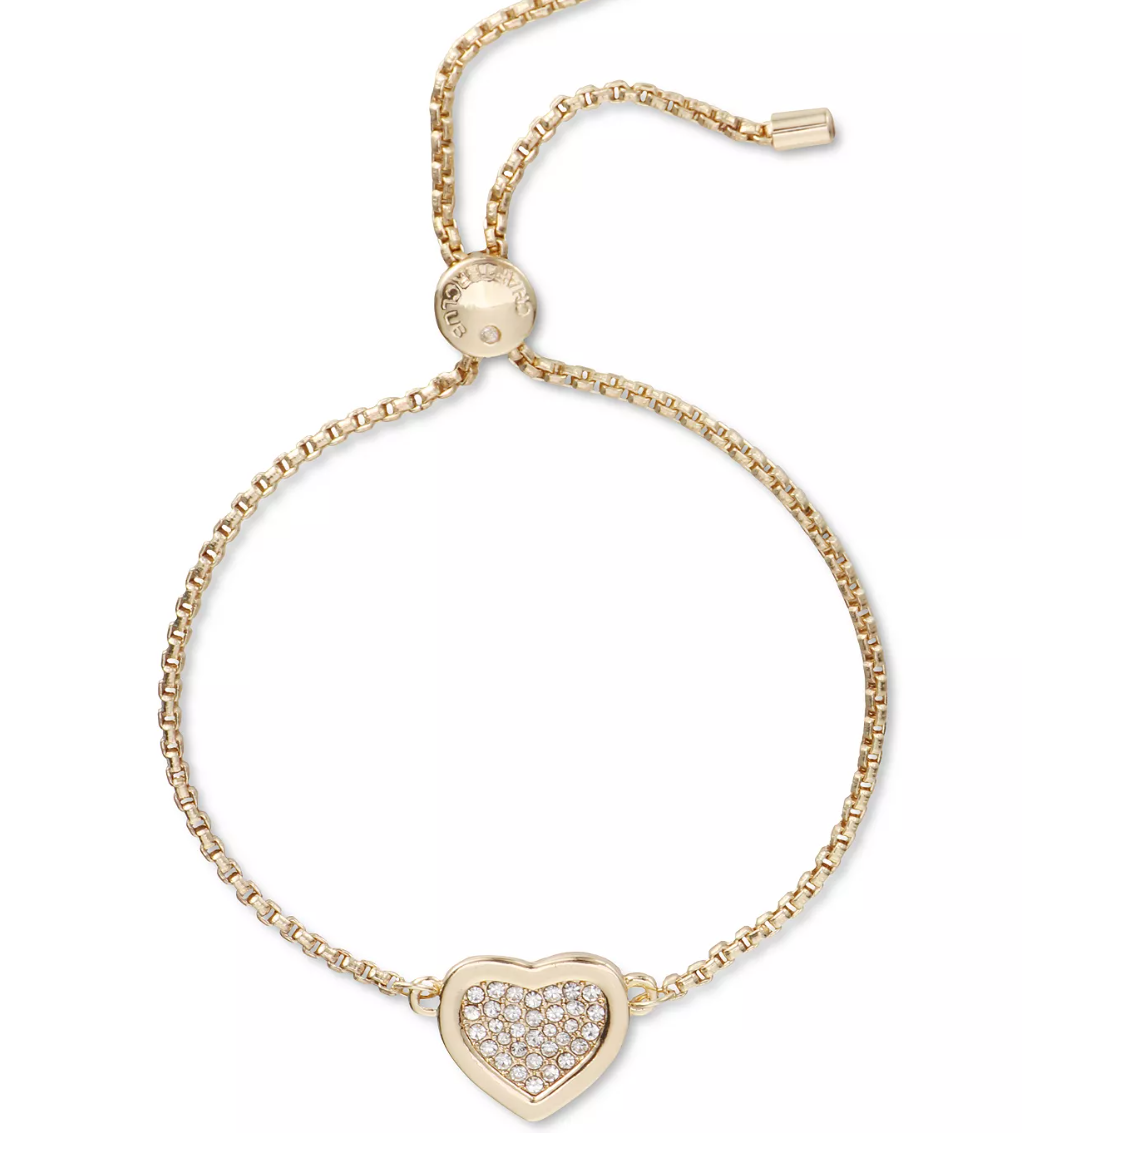 Primary image for Charter Club Gold-Tone Pave Heart Slider Bracelet